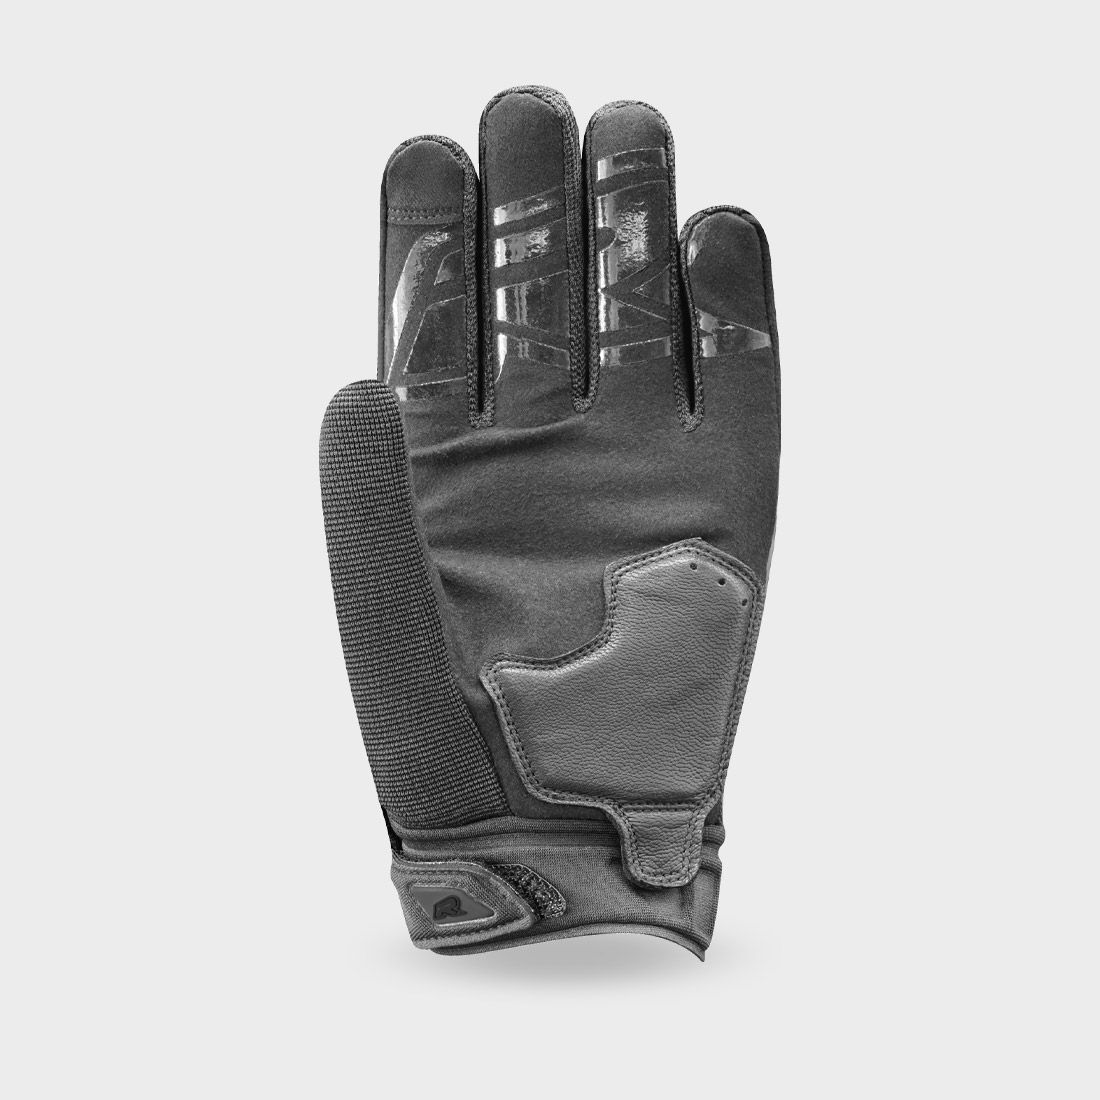 DISPATCHER - Motorcycle gloves